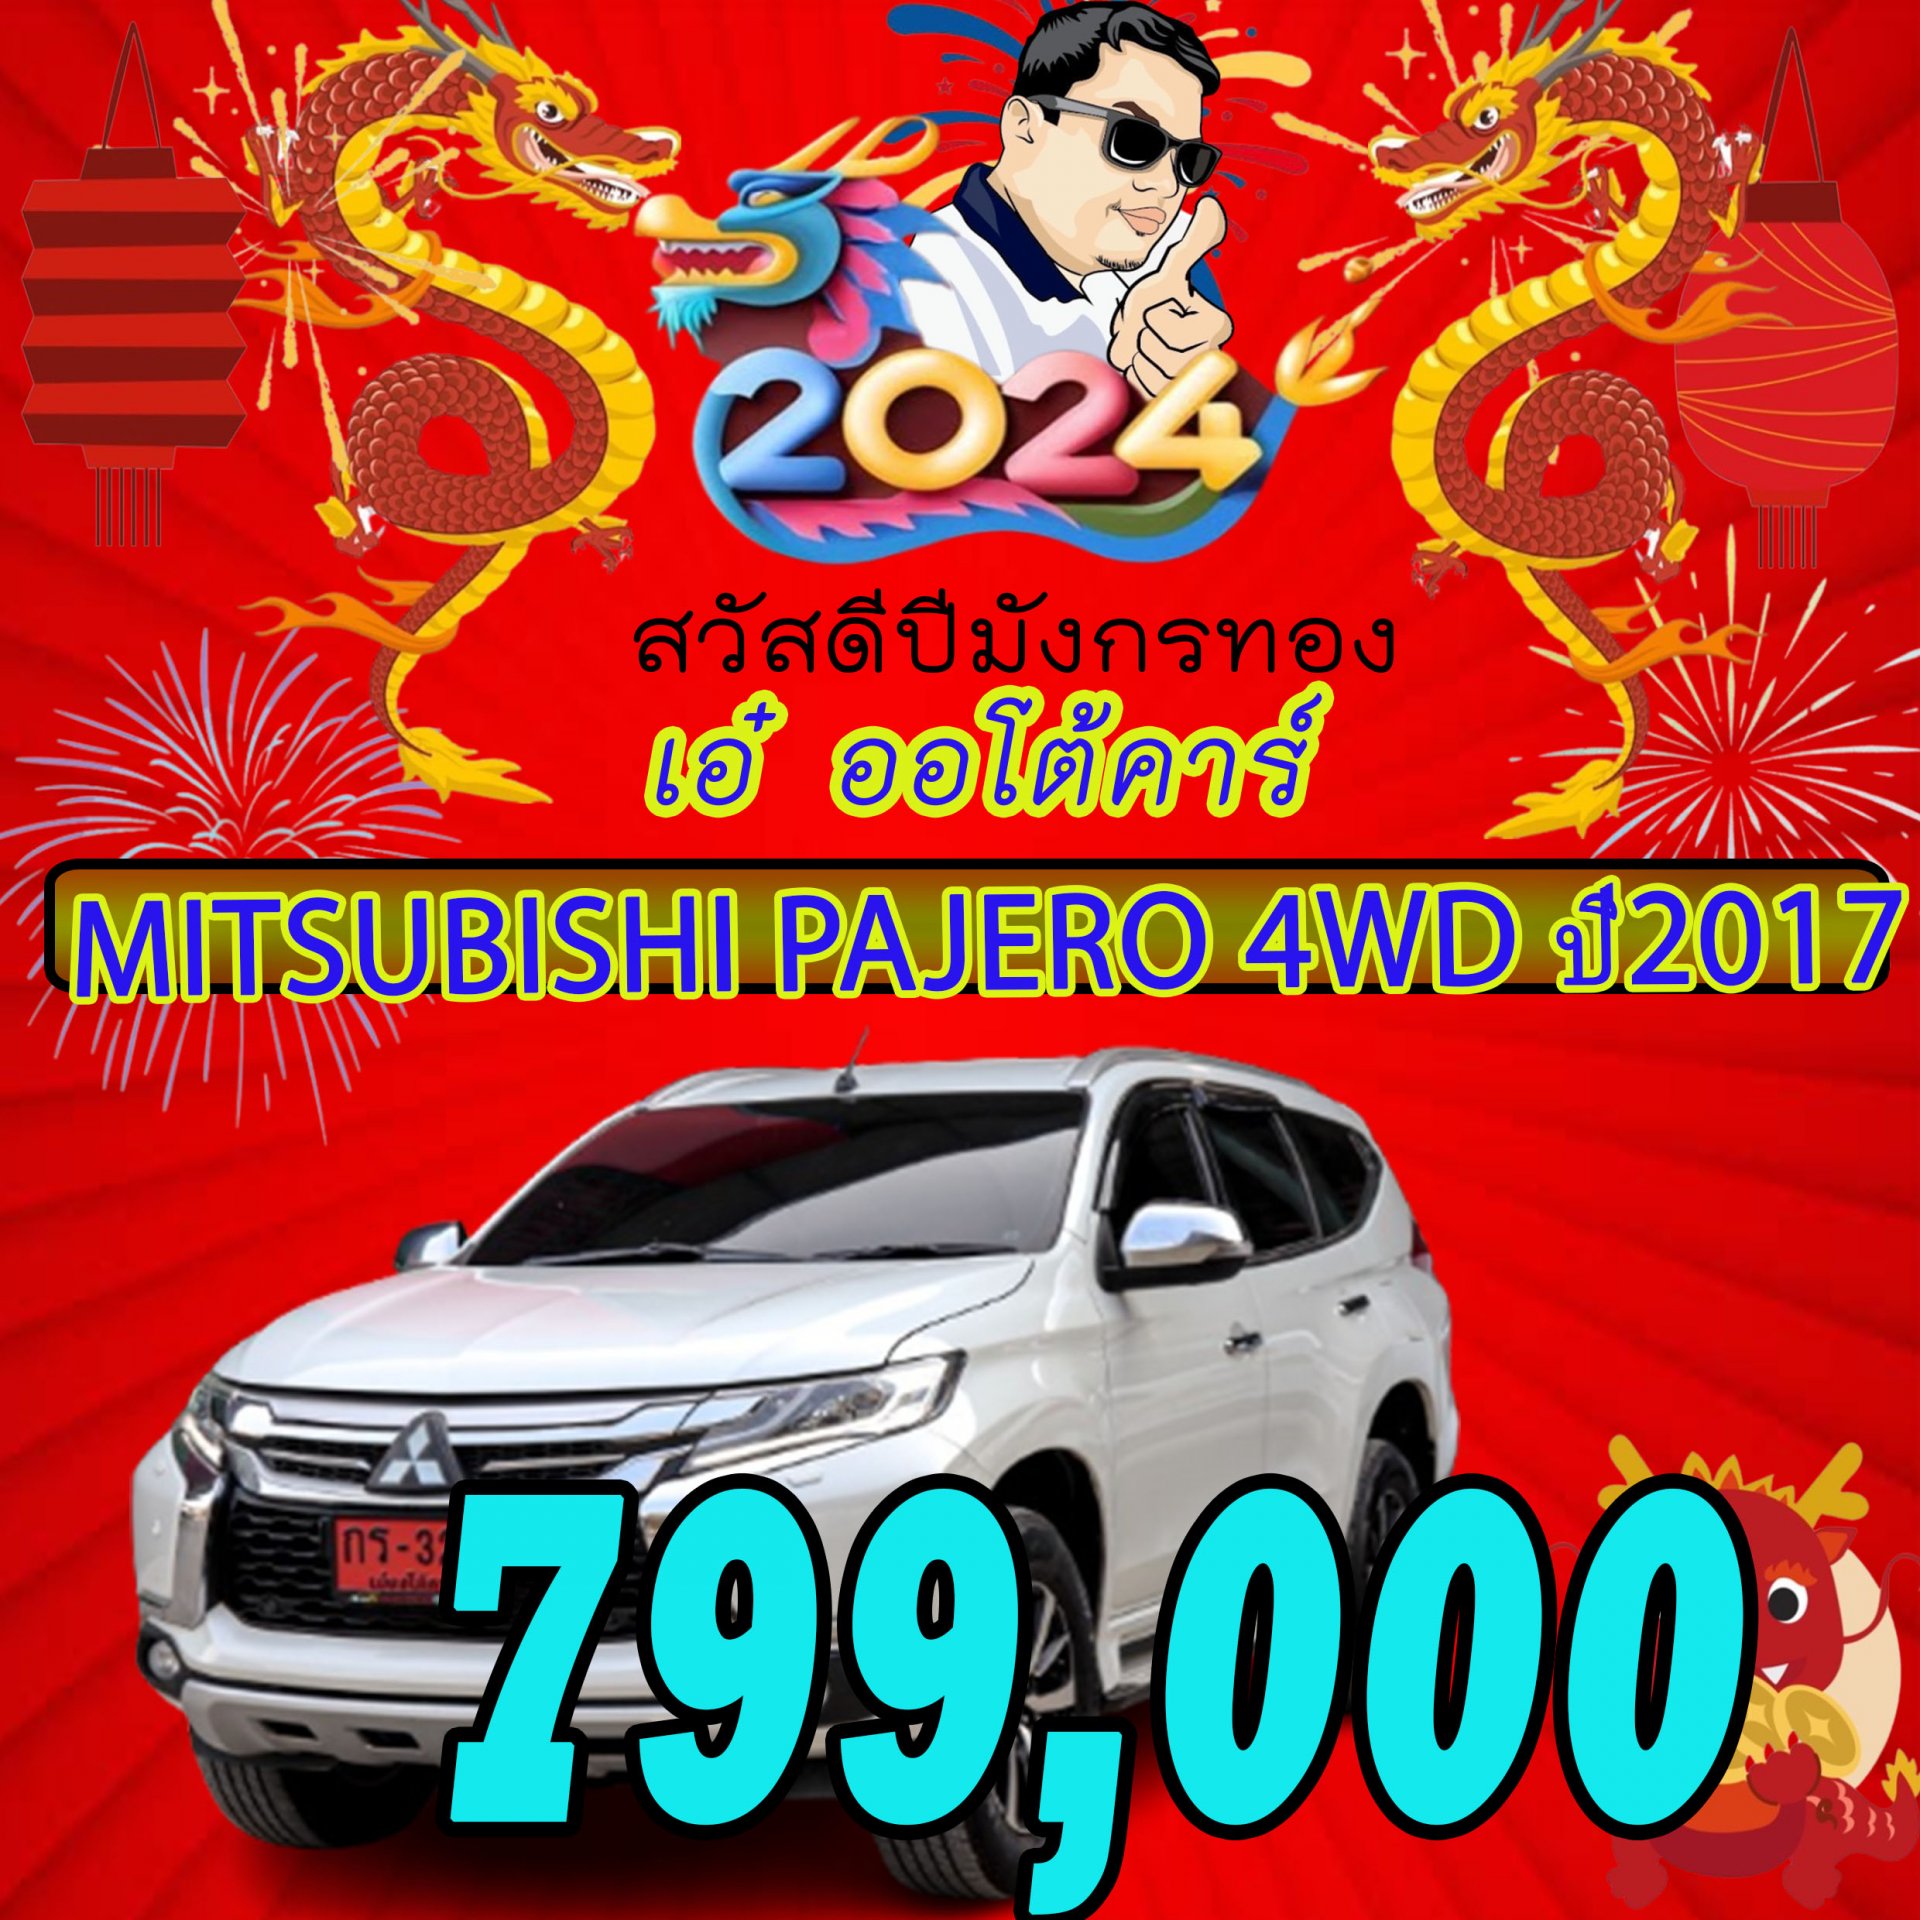 MITSUBISHI PAJERO 4WD ปี2017ราคา799,000บาท